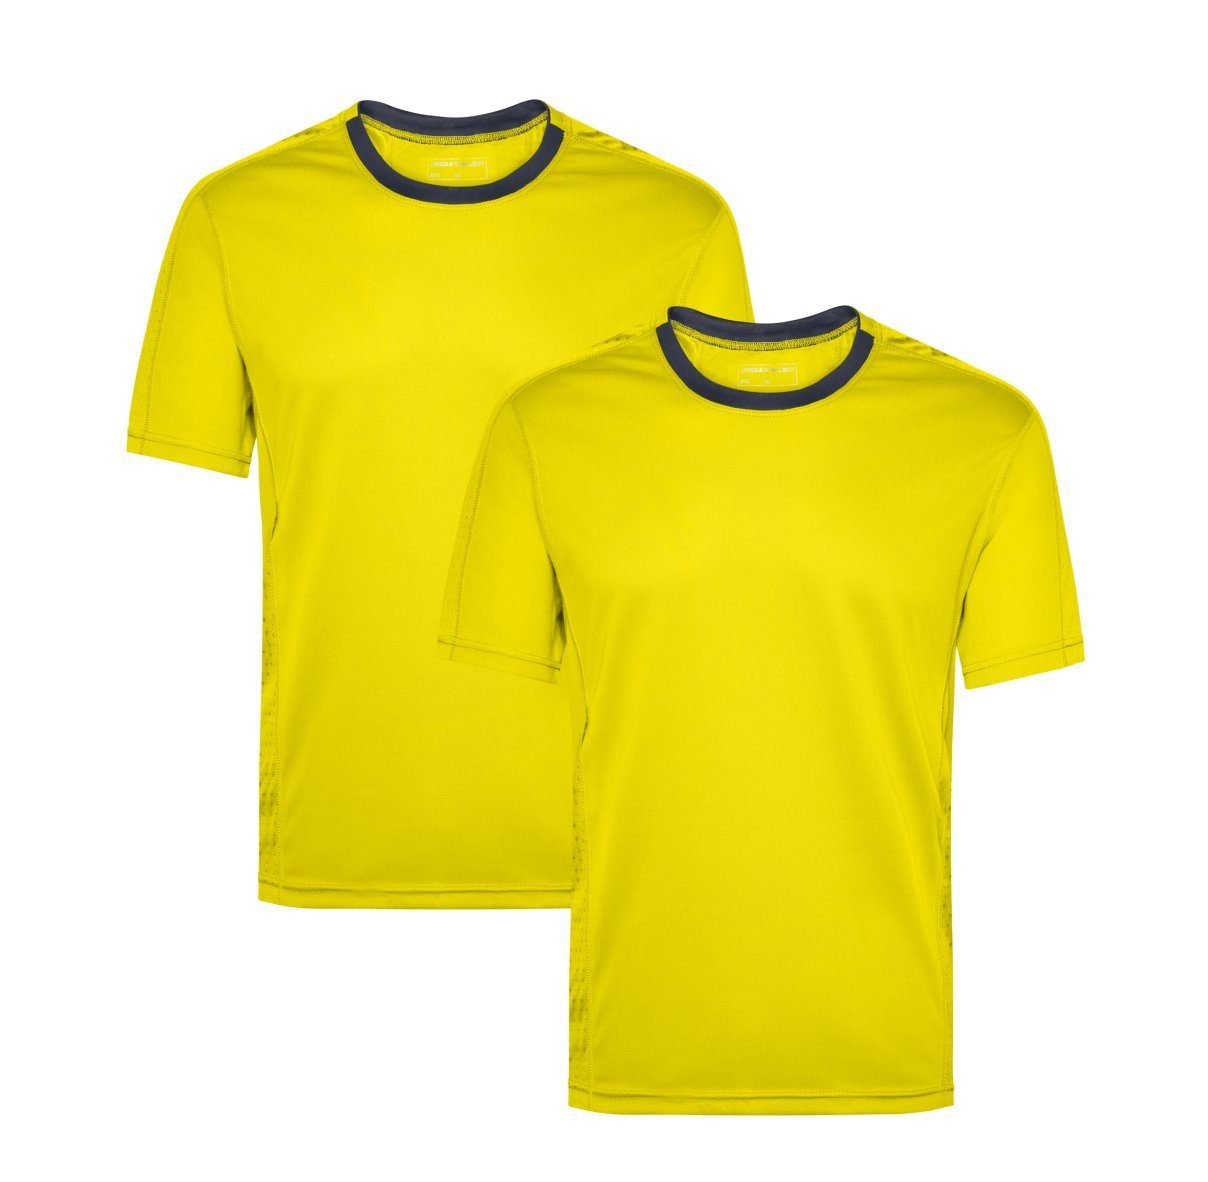 Running Kurzarm James Laufshirt JN472 & Feuchtigkeitsregulierend Atmungsaktiv T-Shirt Laufshirt und lemon/iron-grey 2er-Pack) (Doppelpack, Doppelpack Herren Nicholson